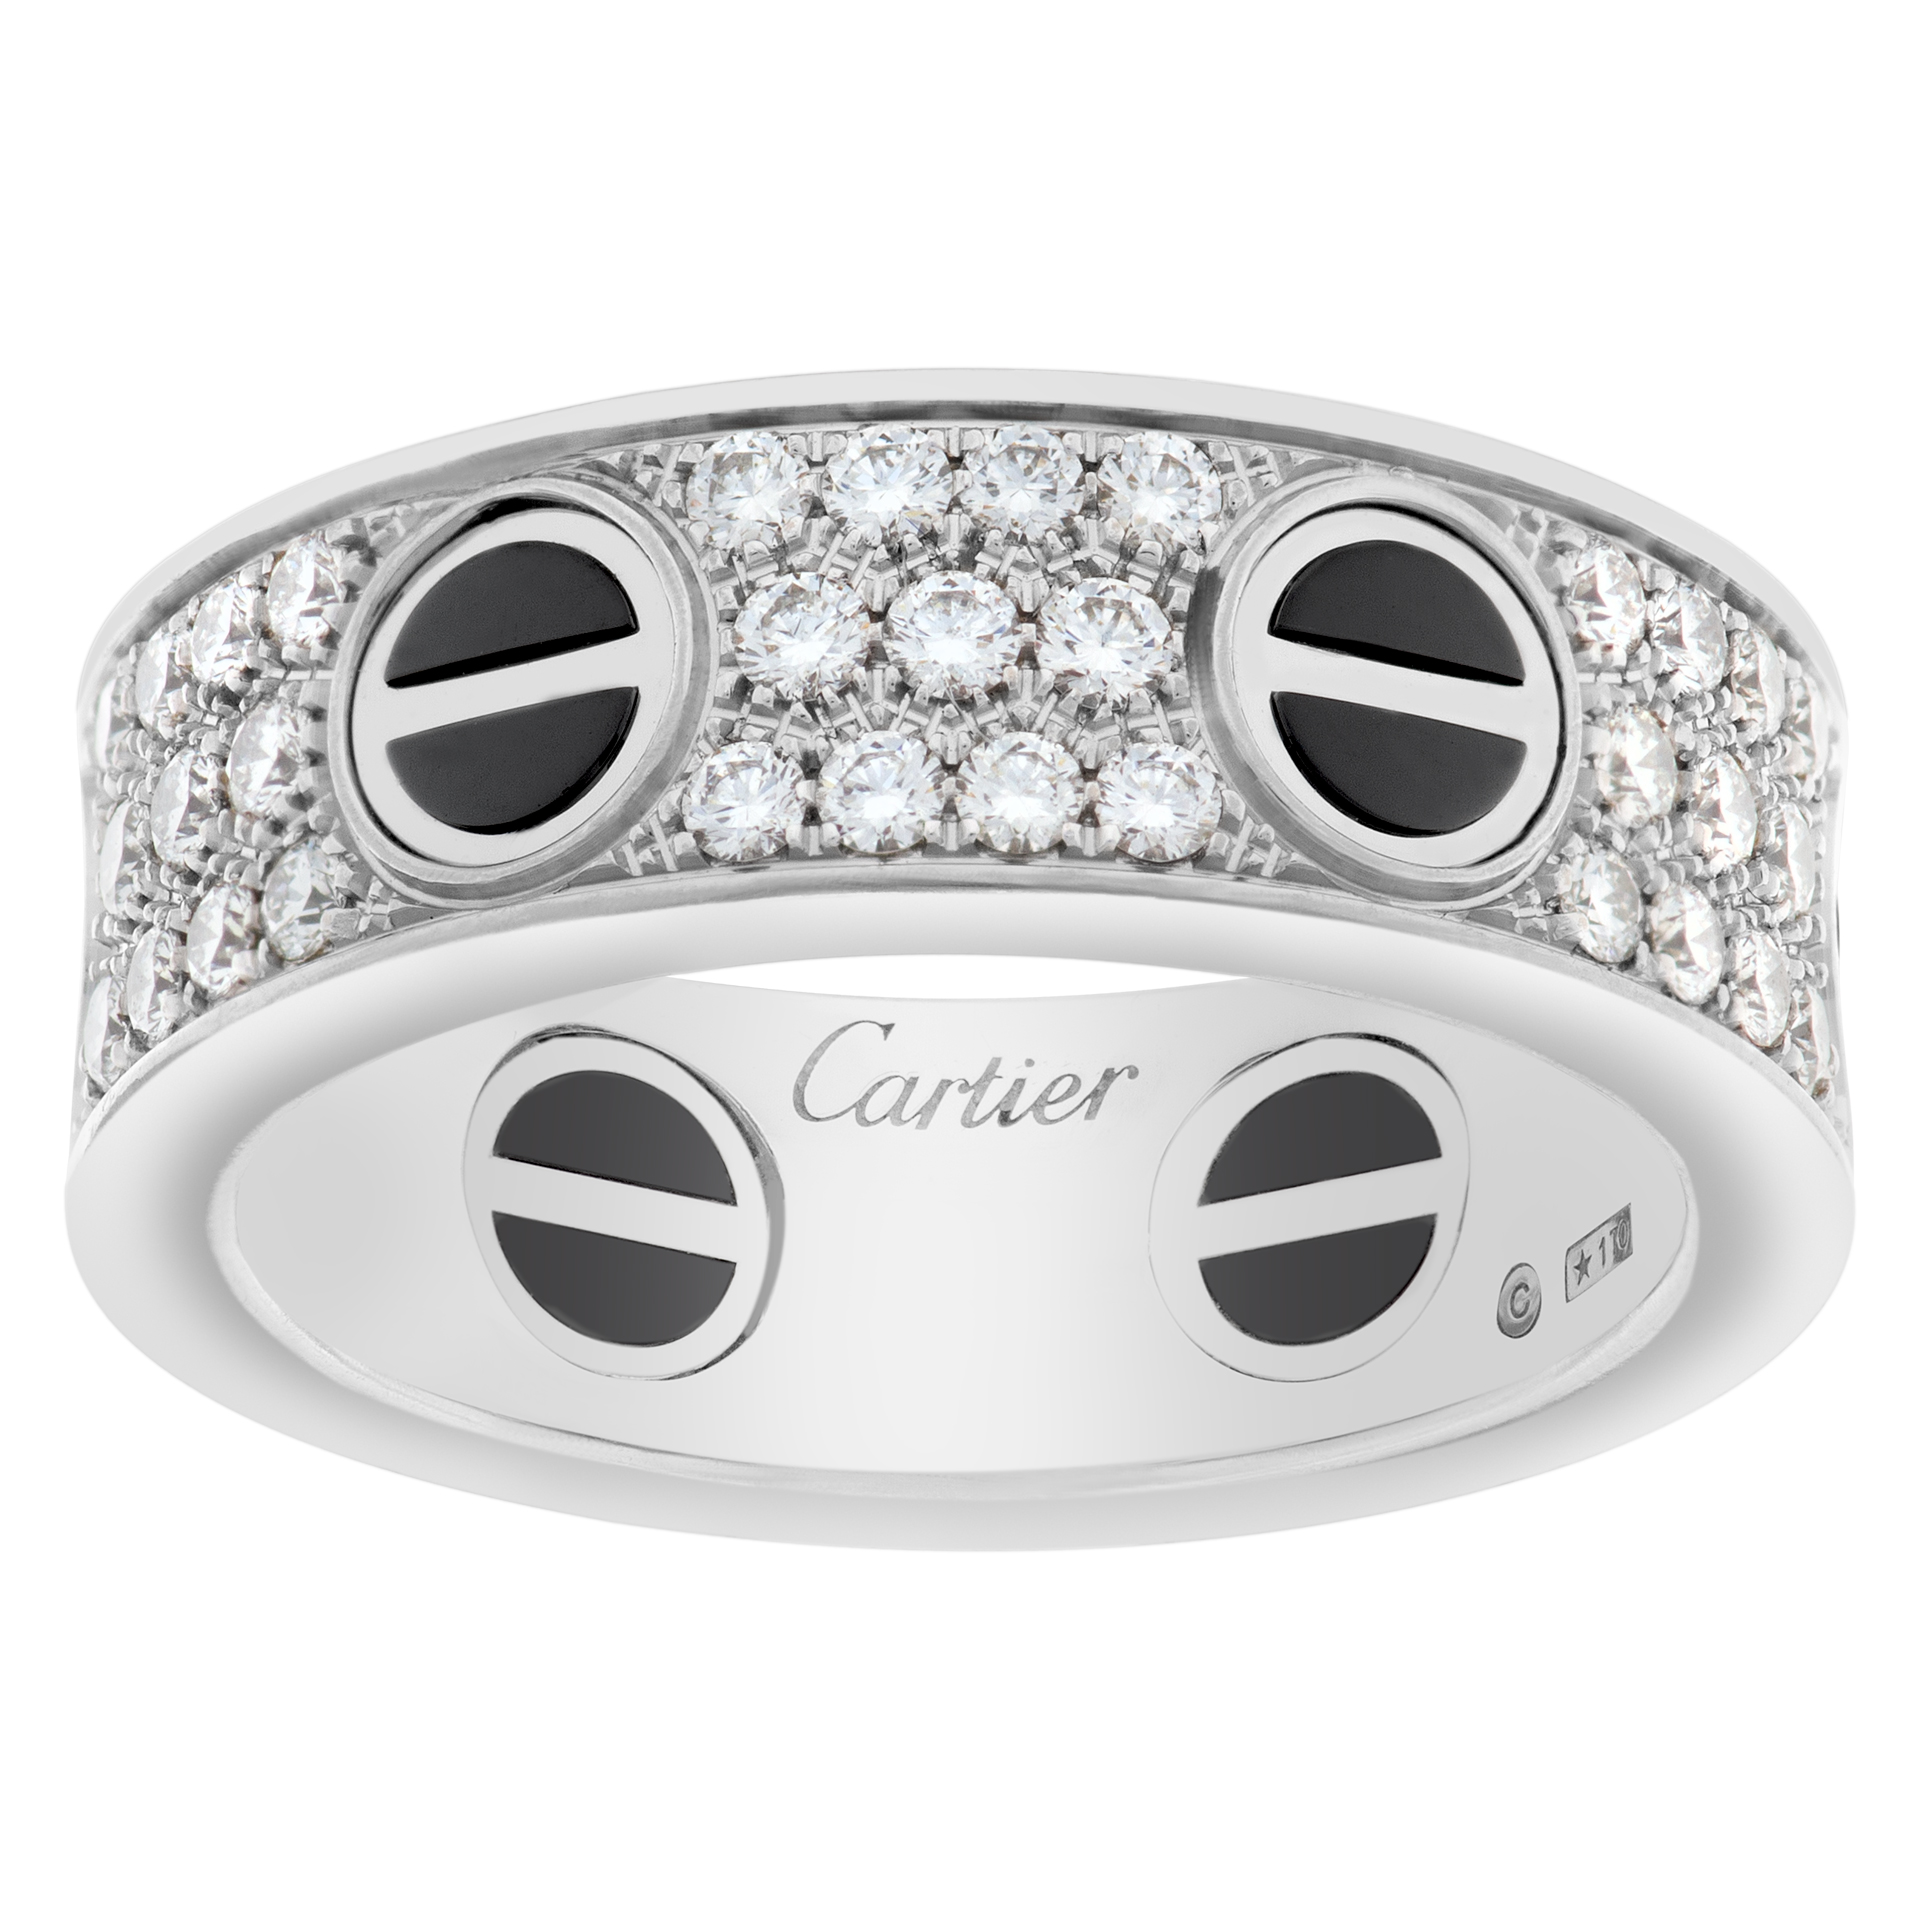 Cartier Love ring, 18K white gold, black ceramic, set with 66 brilliant-cut diamonds (Stones)